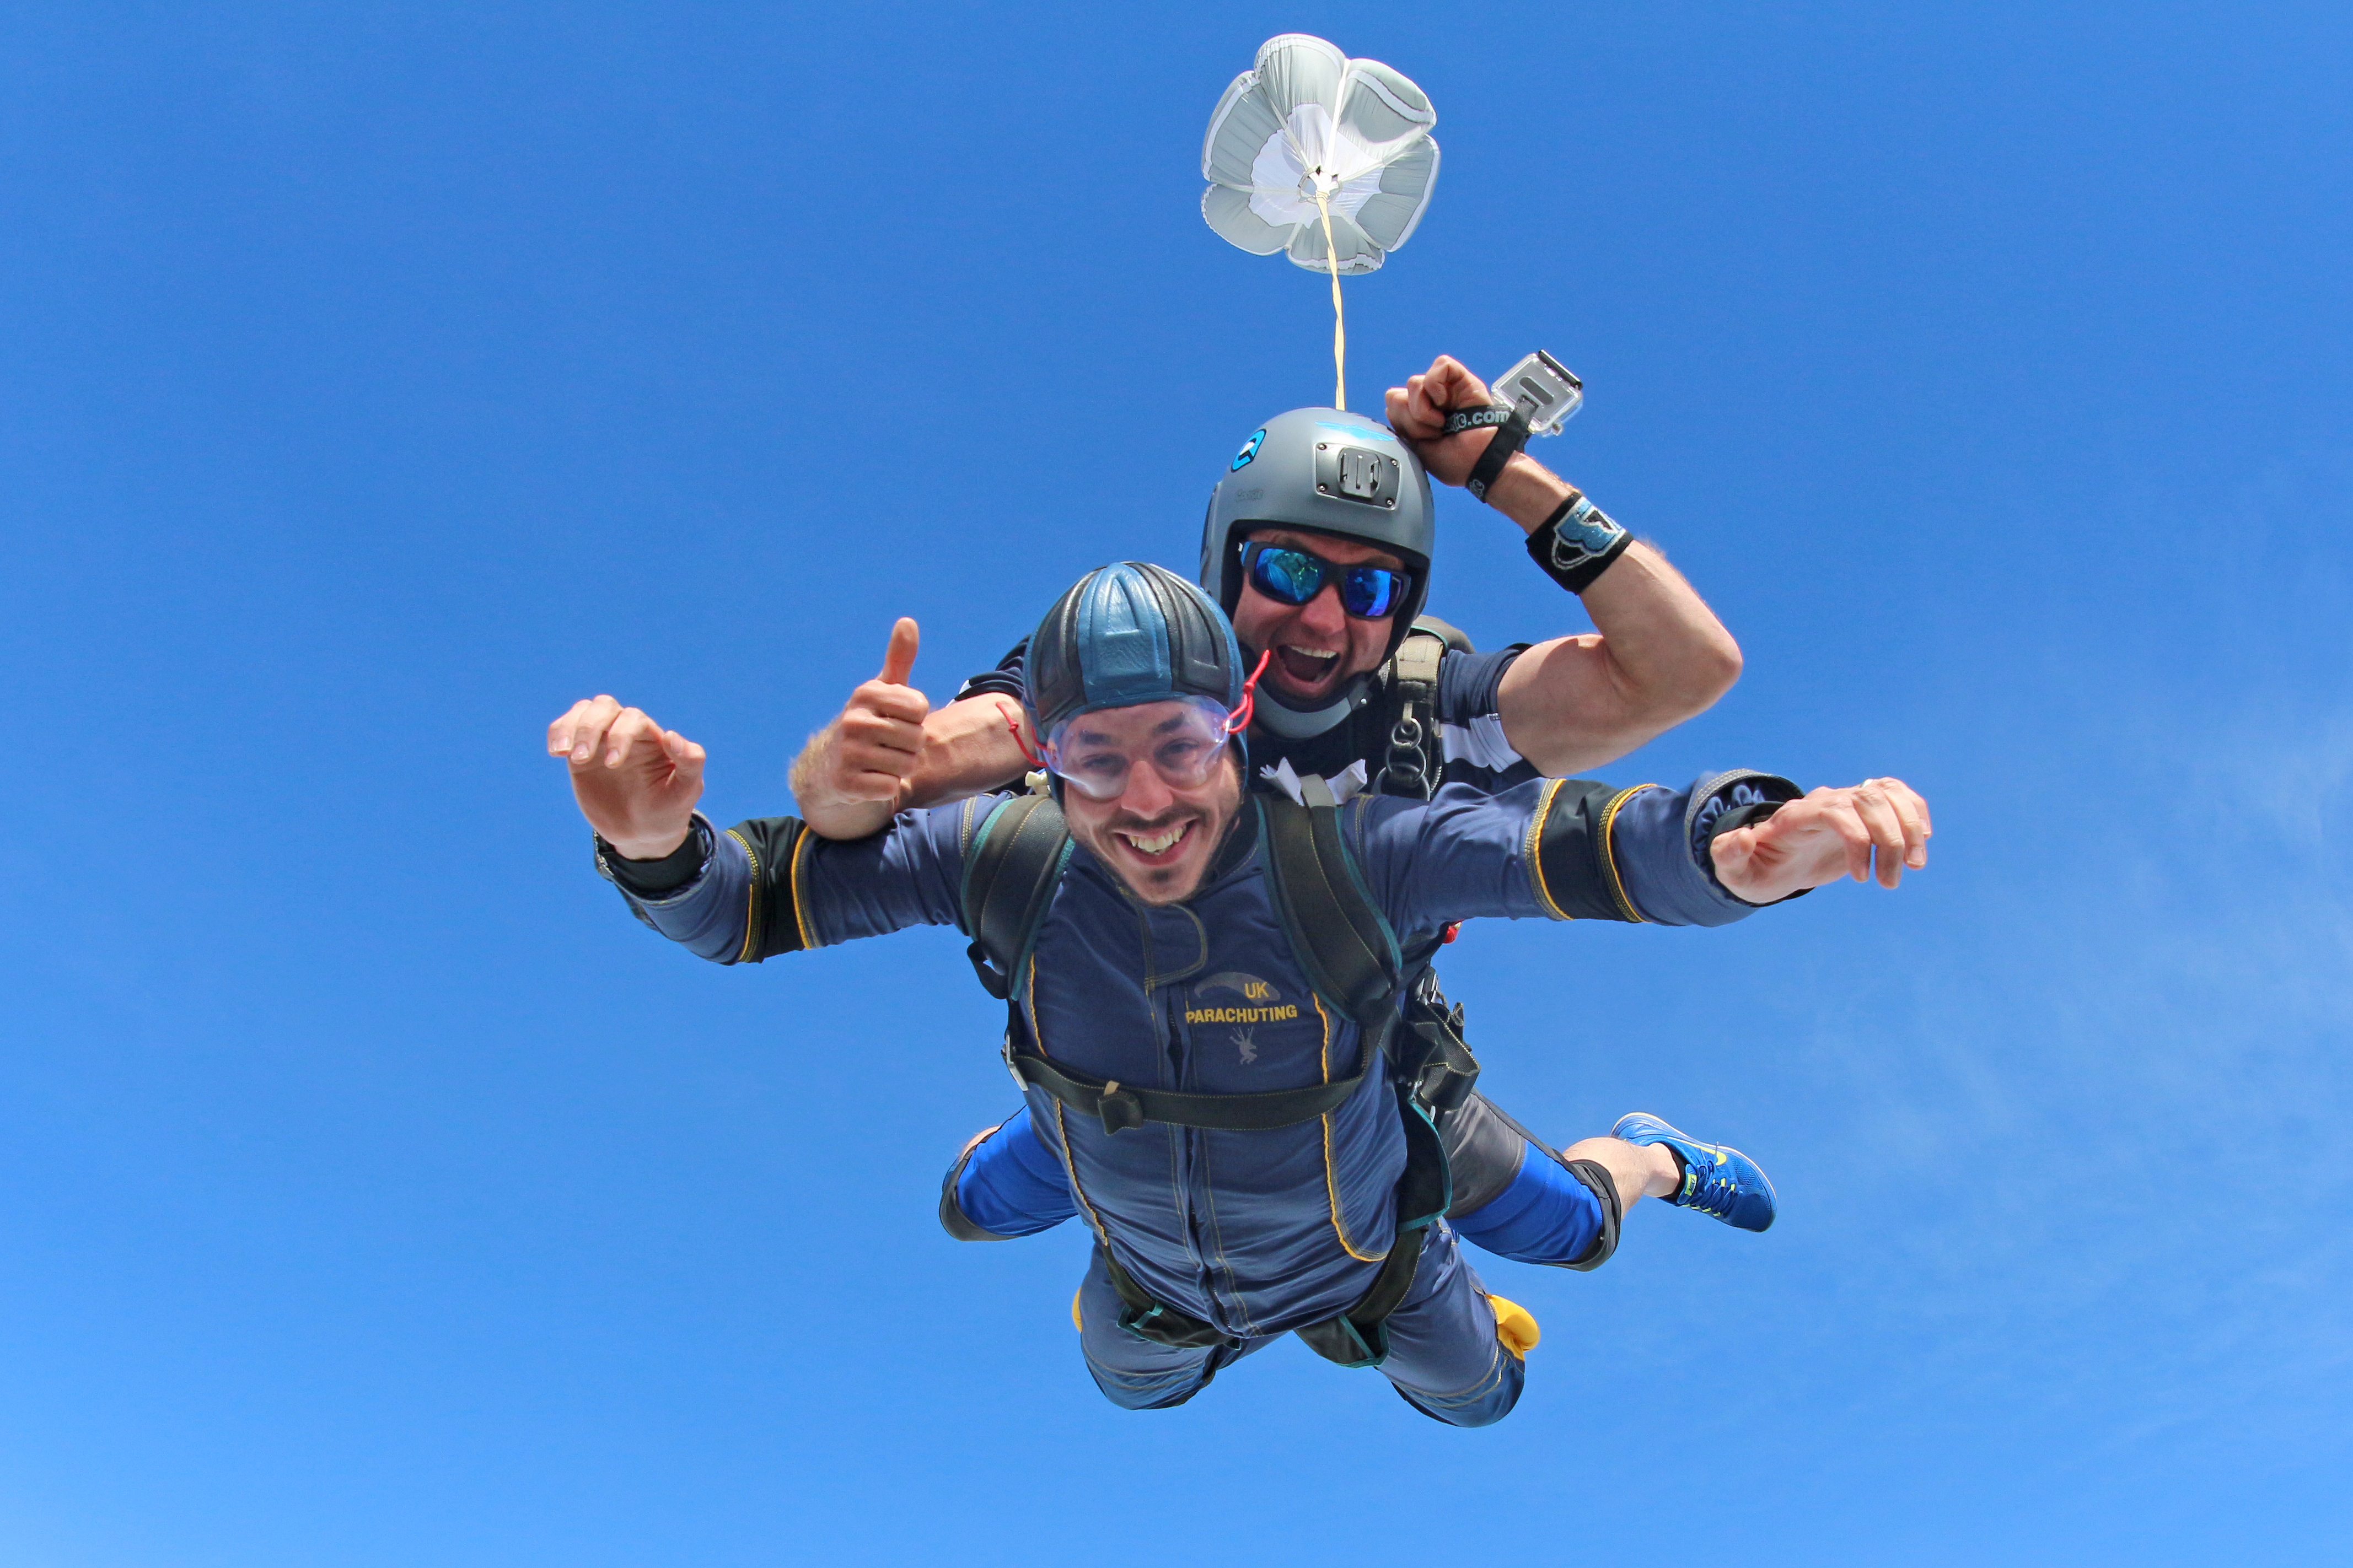 Nick tandem 2 june 15 by PD - UK Parachuting